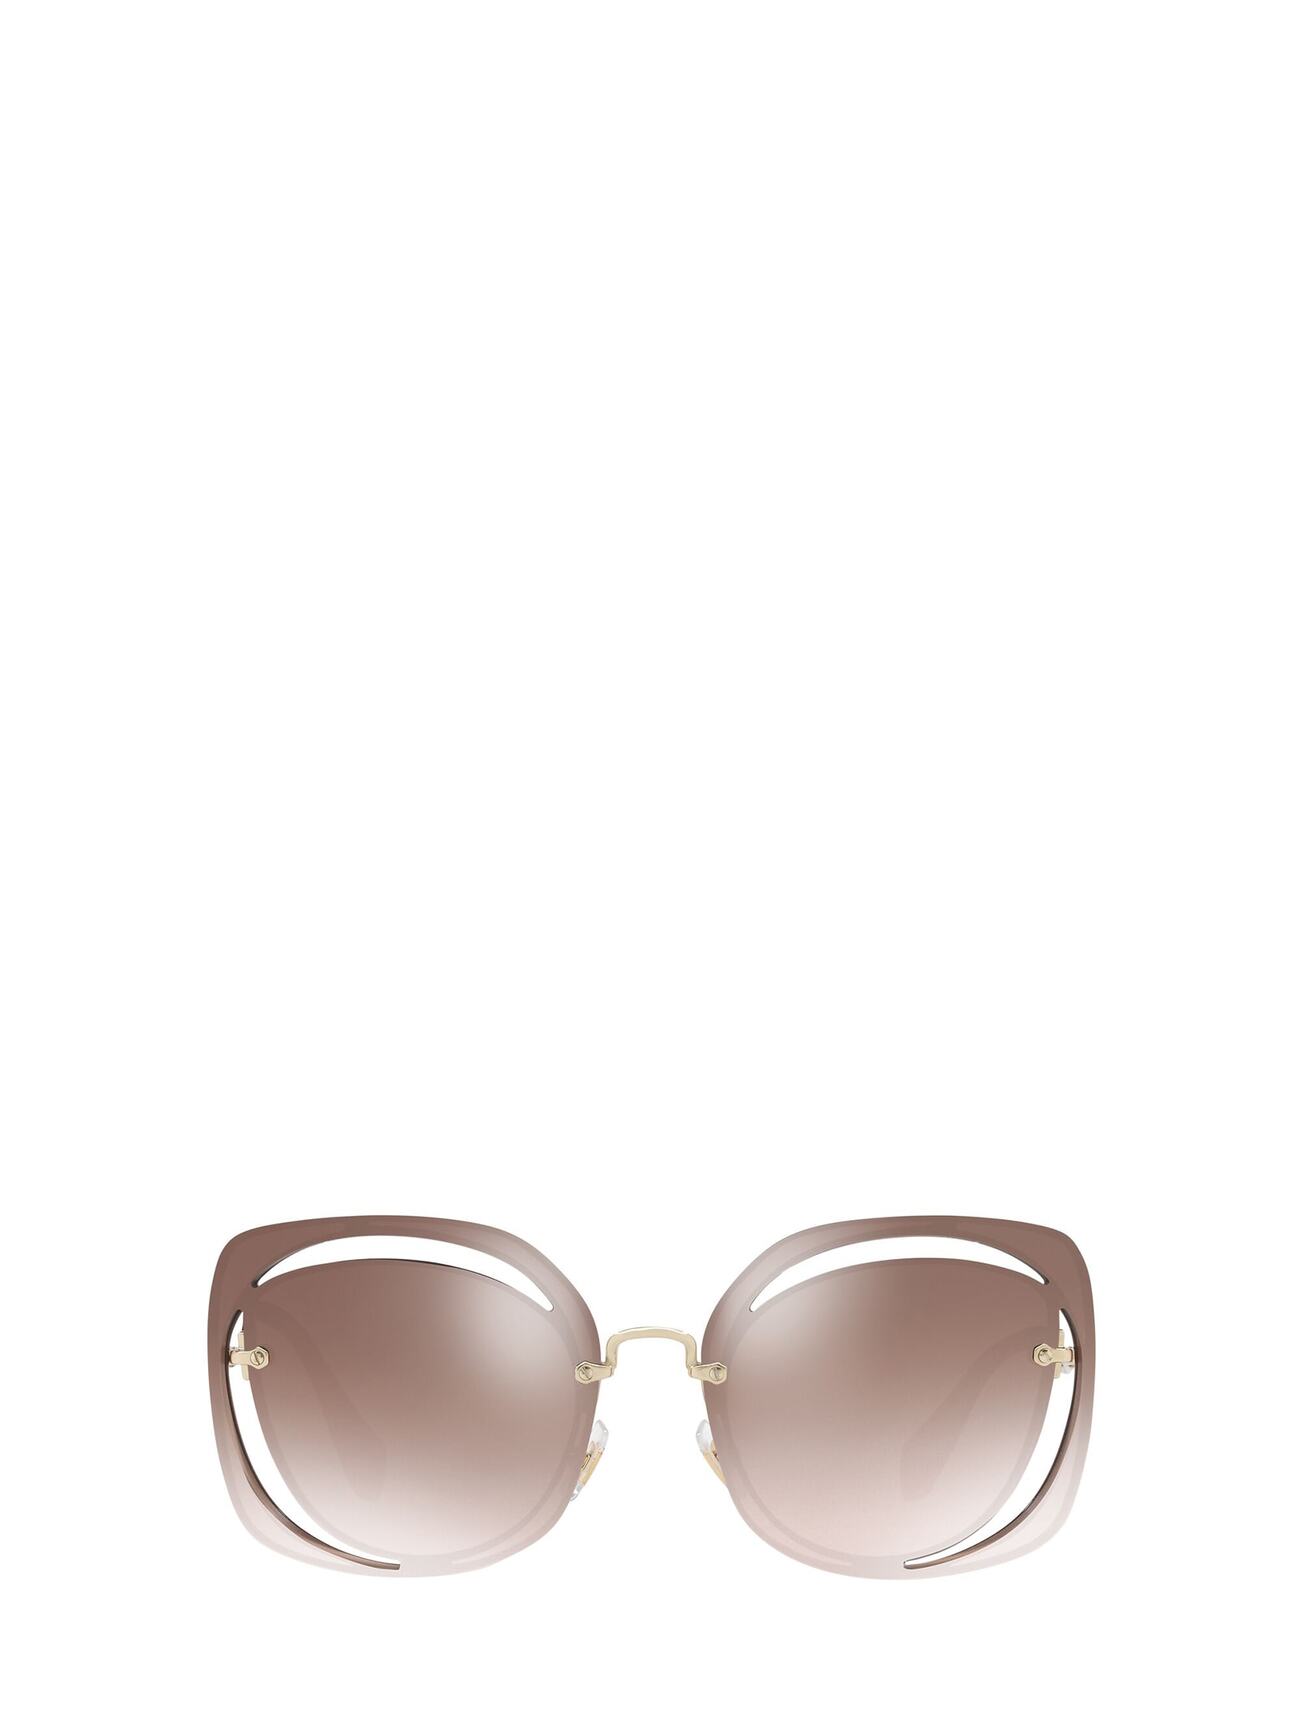 Miu Miu Eyewear Mu 54ss Brown Sunglasses